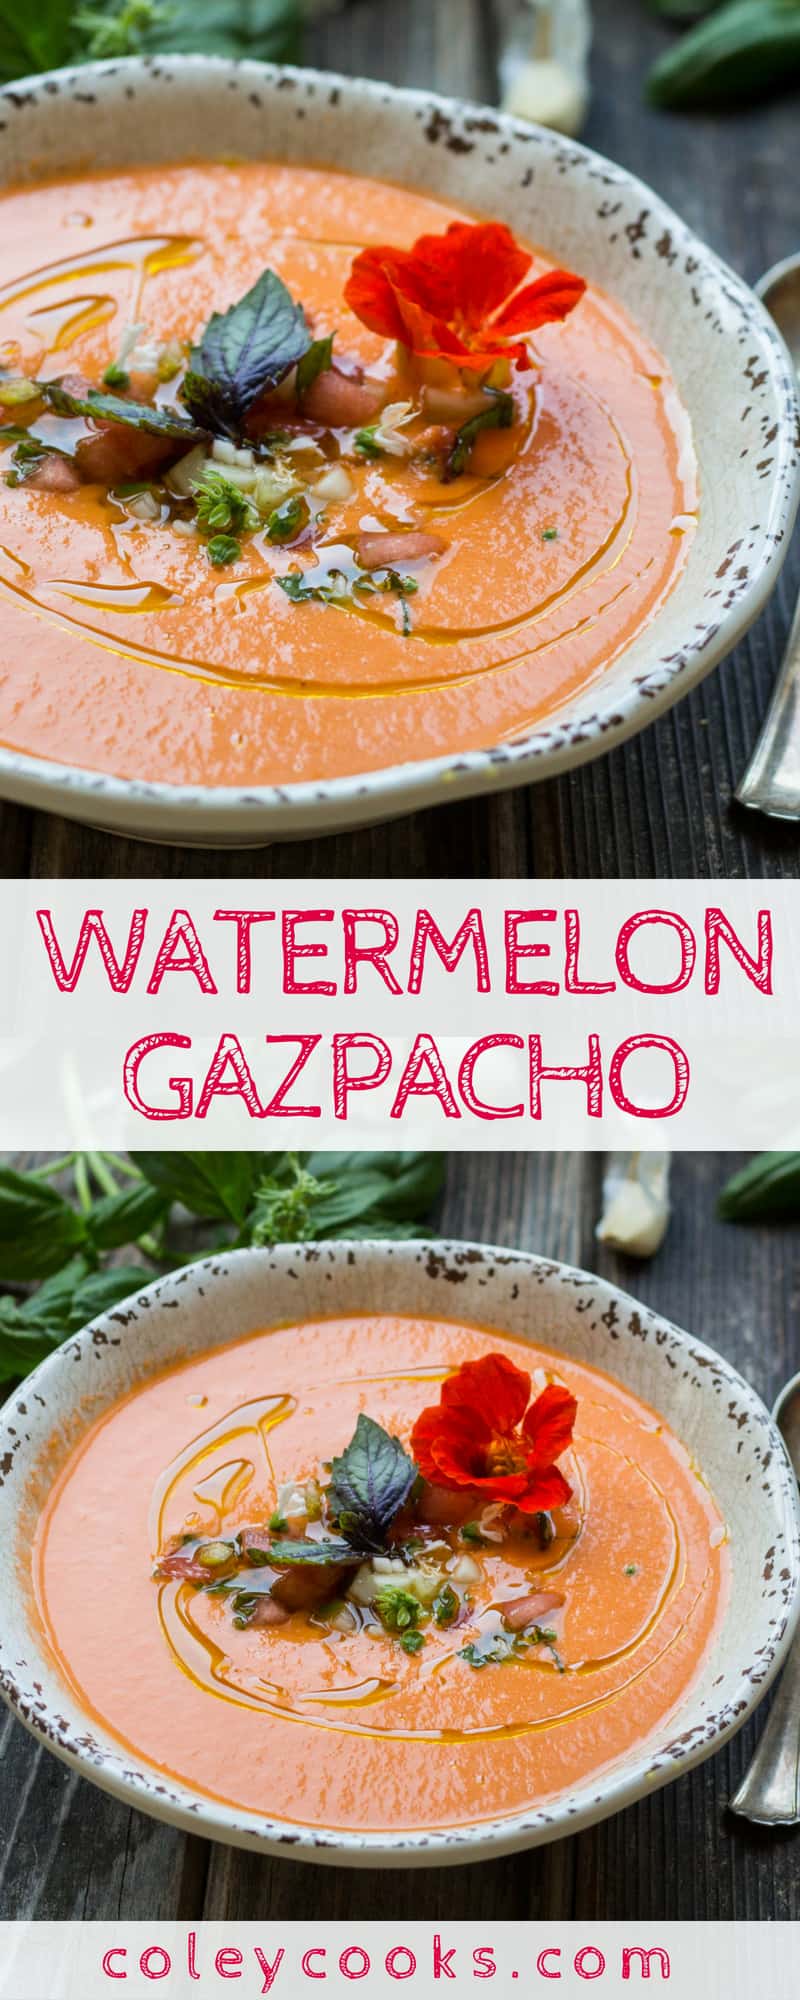 WATERMELON GAZPACHO| Easy vegan gazpacho recipe! Silky smooth, perfectly balanced, insanely delicious on a hot summer day! #summer #soup #watermelon #gazpacho #vegan #plantbased #recipe | ColeyCooks.com